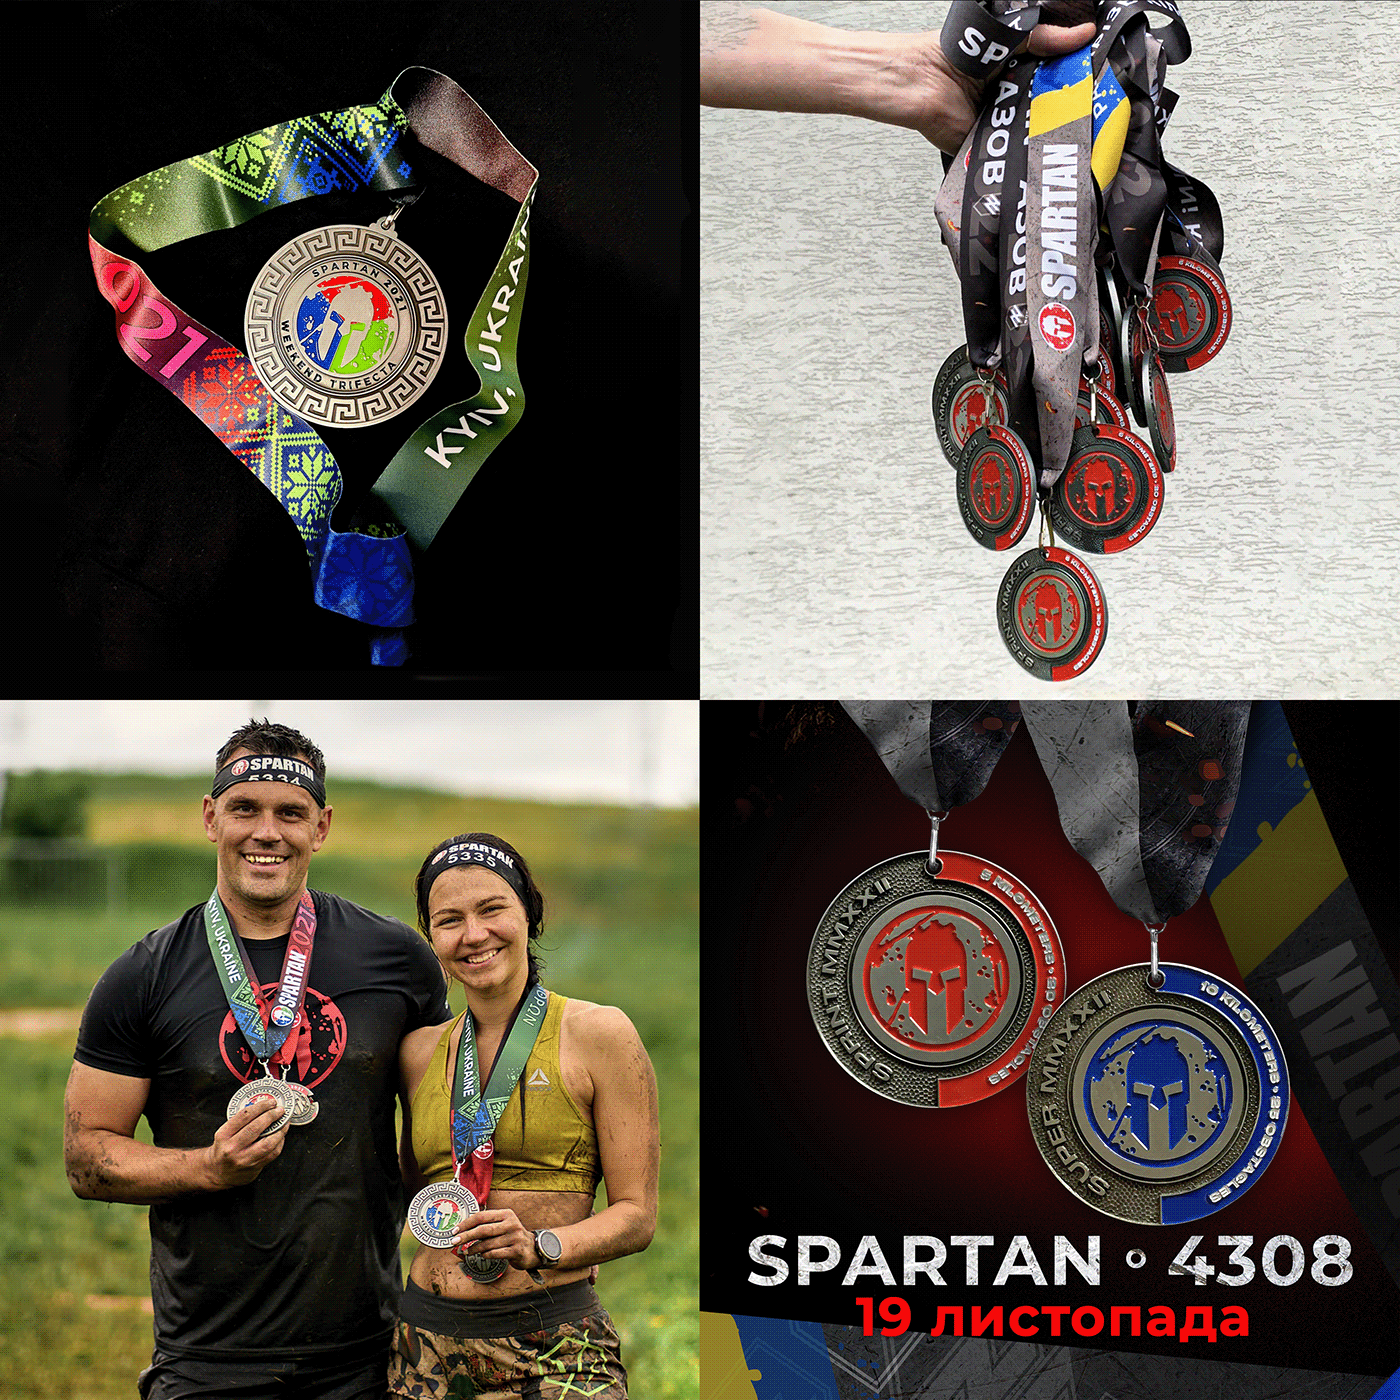 Spartan Race Spartan Merch t-shirt ukraine social media obstacle medals icons Landmark